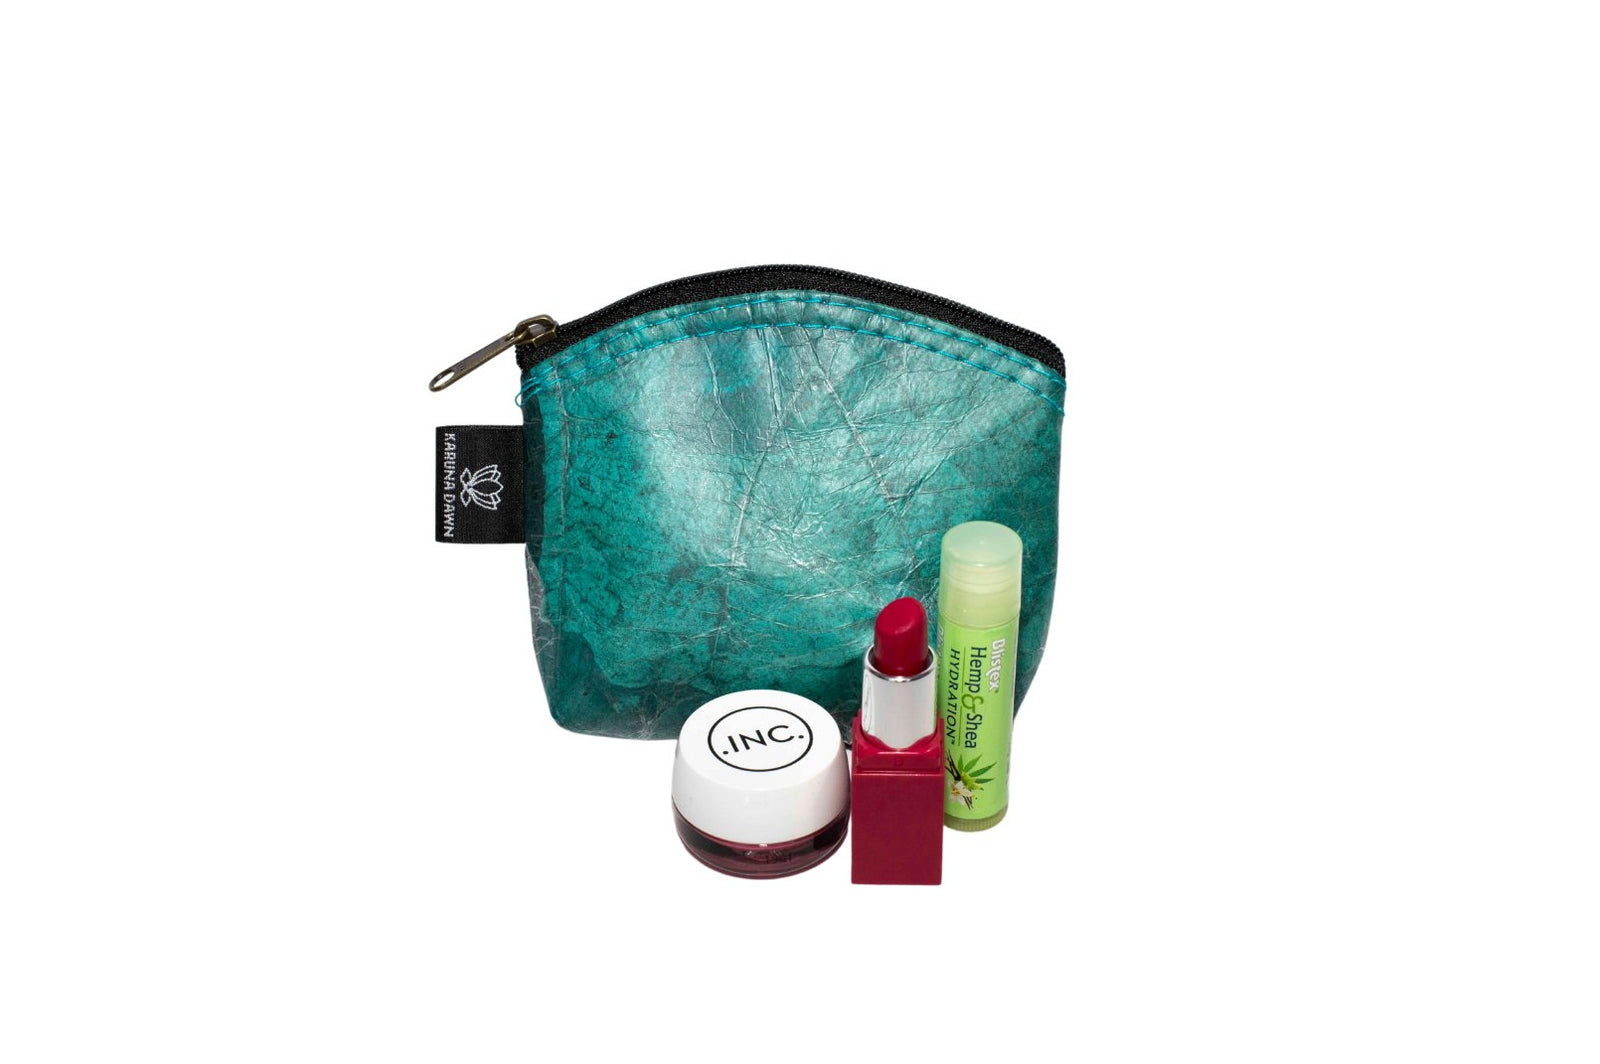 Turquoise Cosmetic Bag - Small-Karuna Dawn-stride